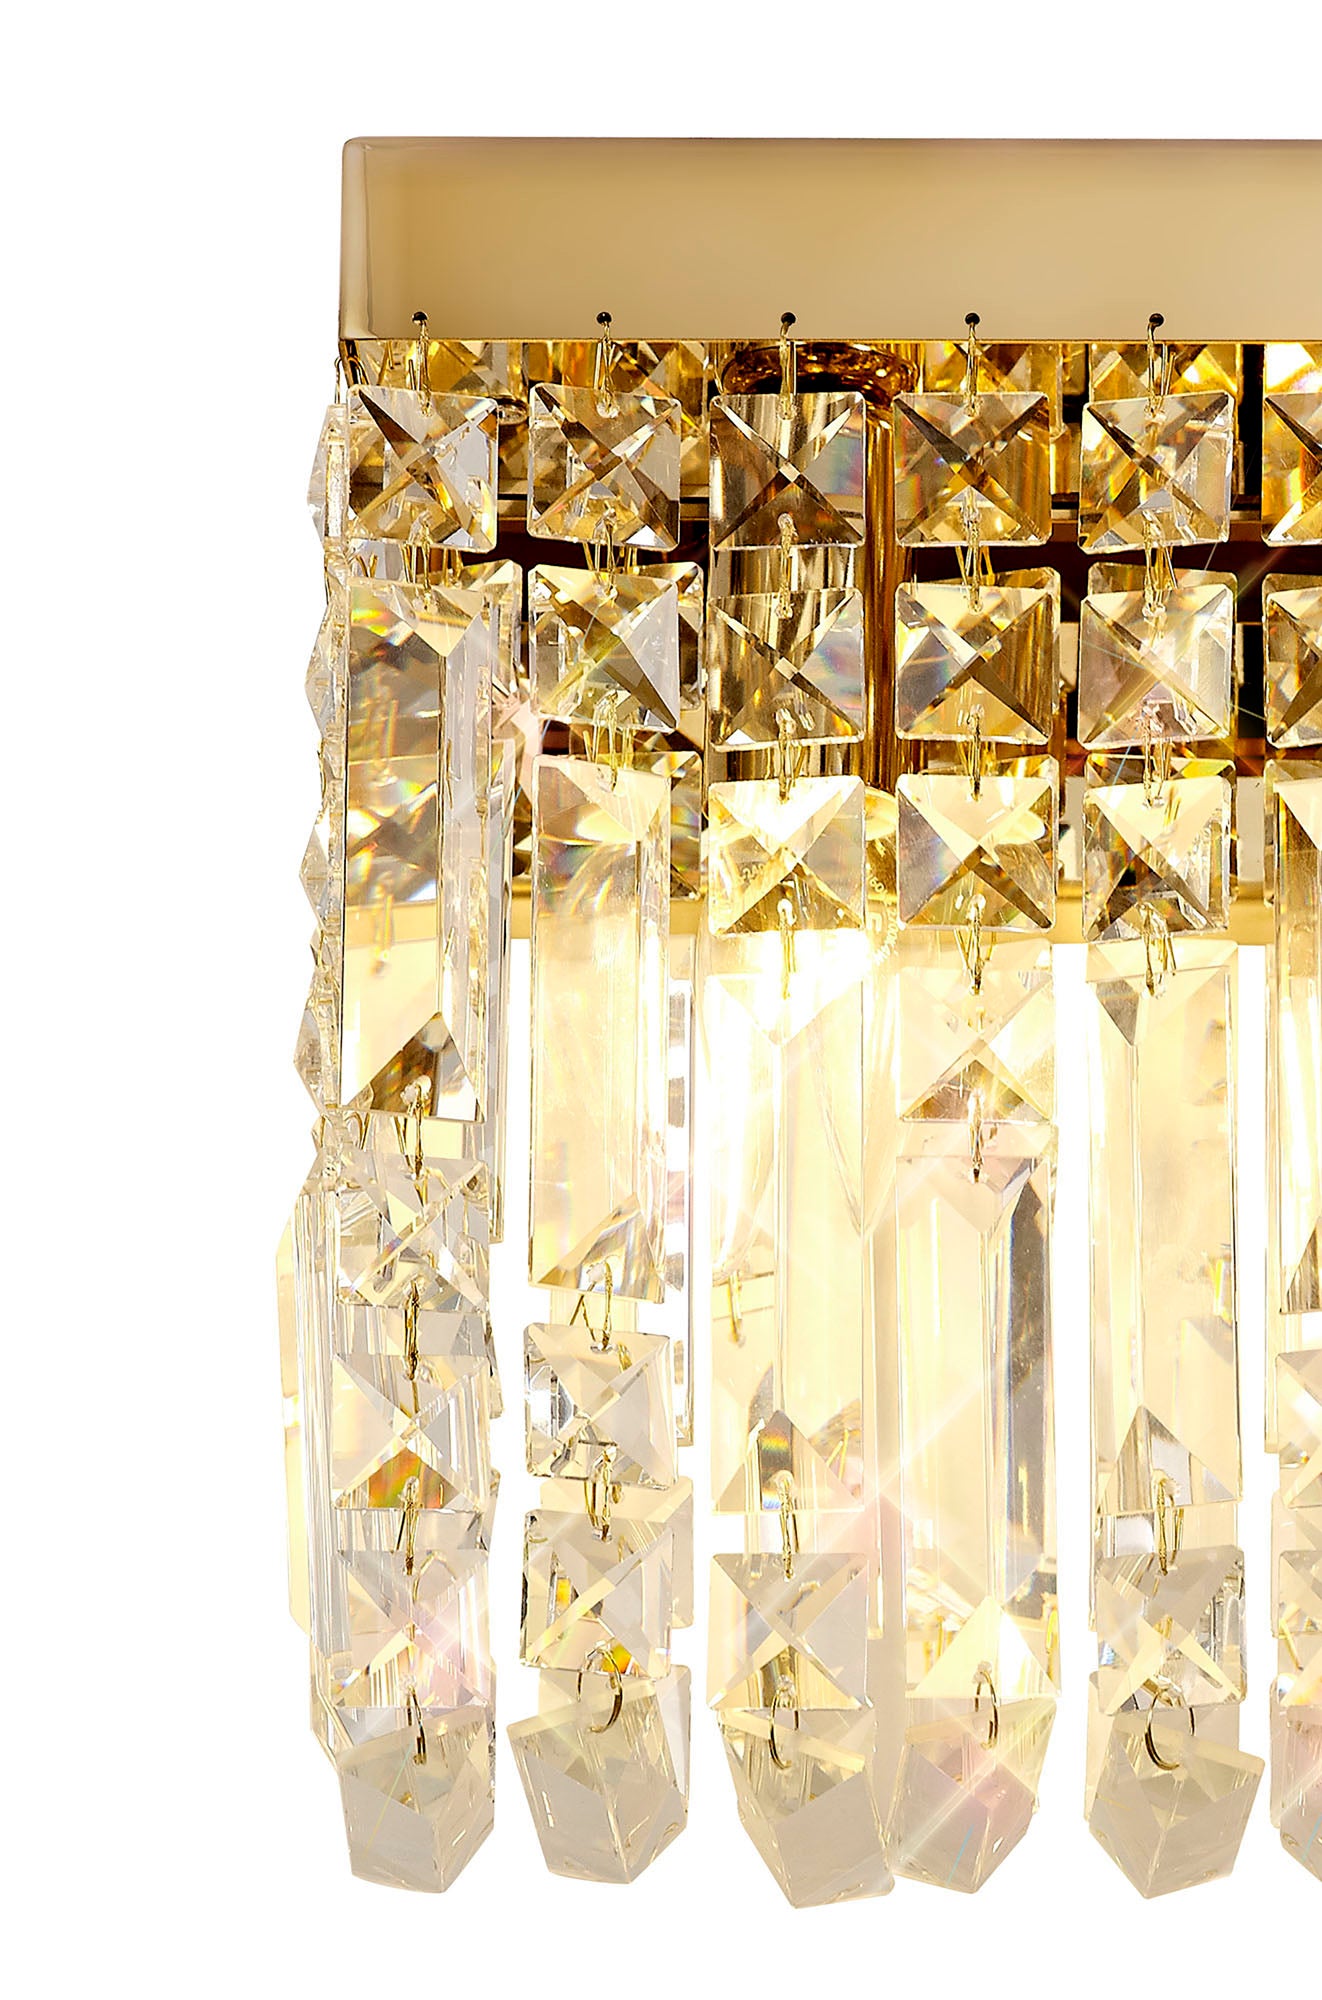 Mayfair 29x13cm Rectangular Small Wall Lamp, 2 Light E14, Gold/Crystal LO178203